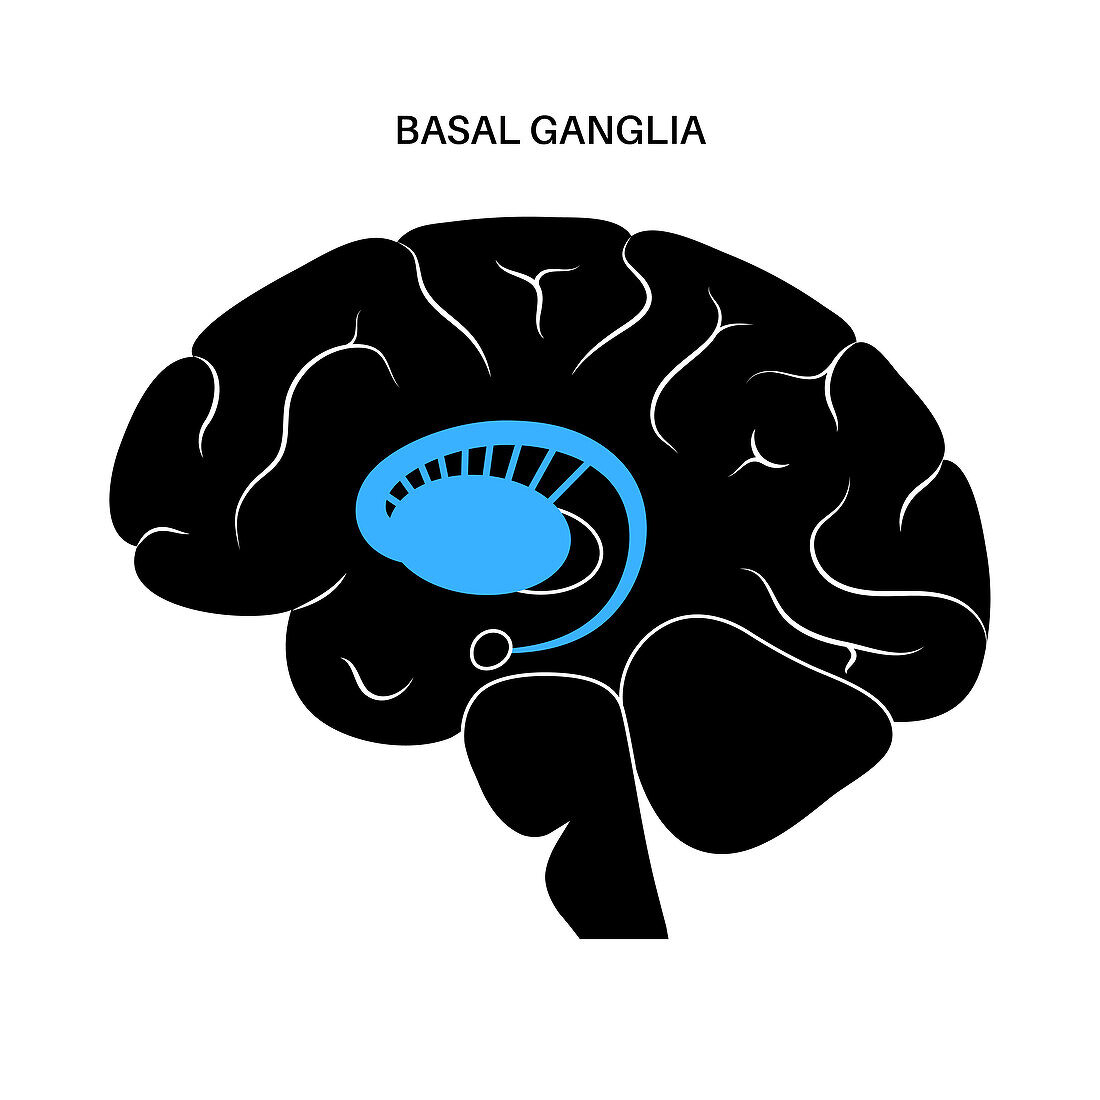 Basal ganglia anatomy, illustration